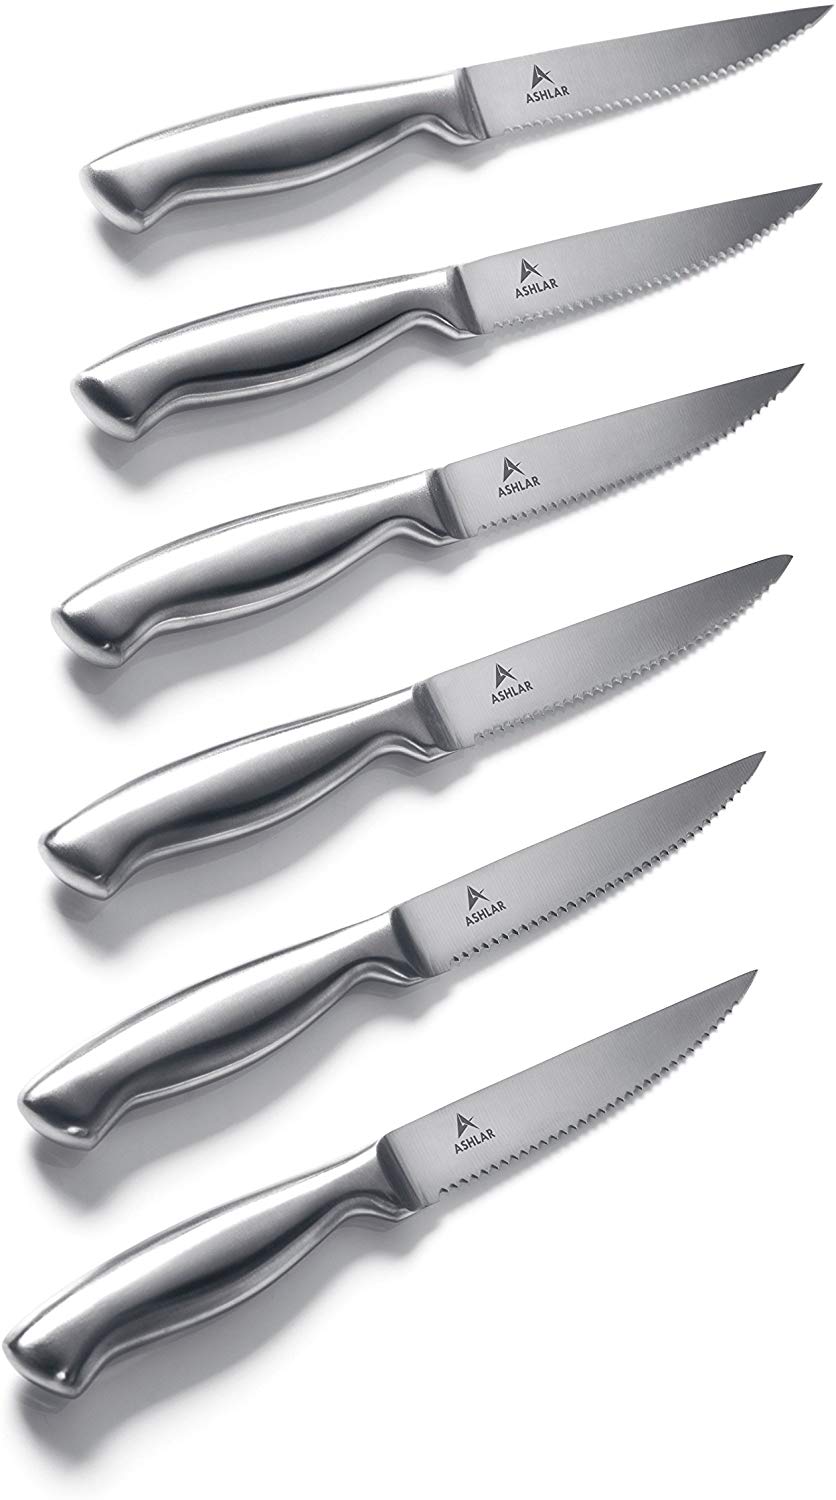 https://www.dontwasteyourmoney.com/wp-content/uploads/2019/11/ashlar-steak-knives-set-steak-knife.jpg